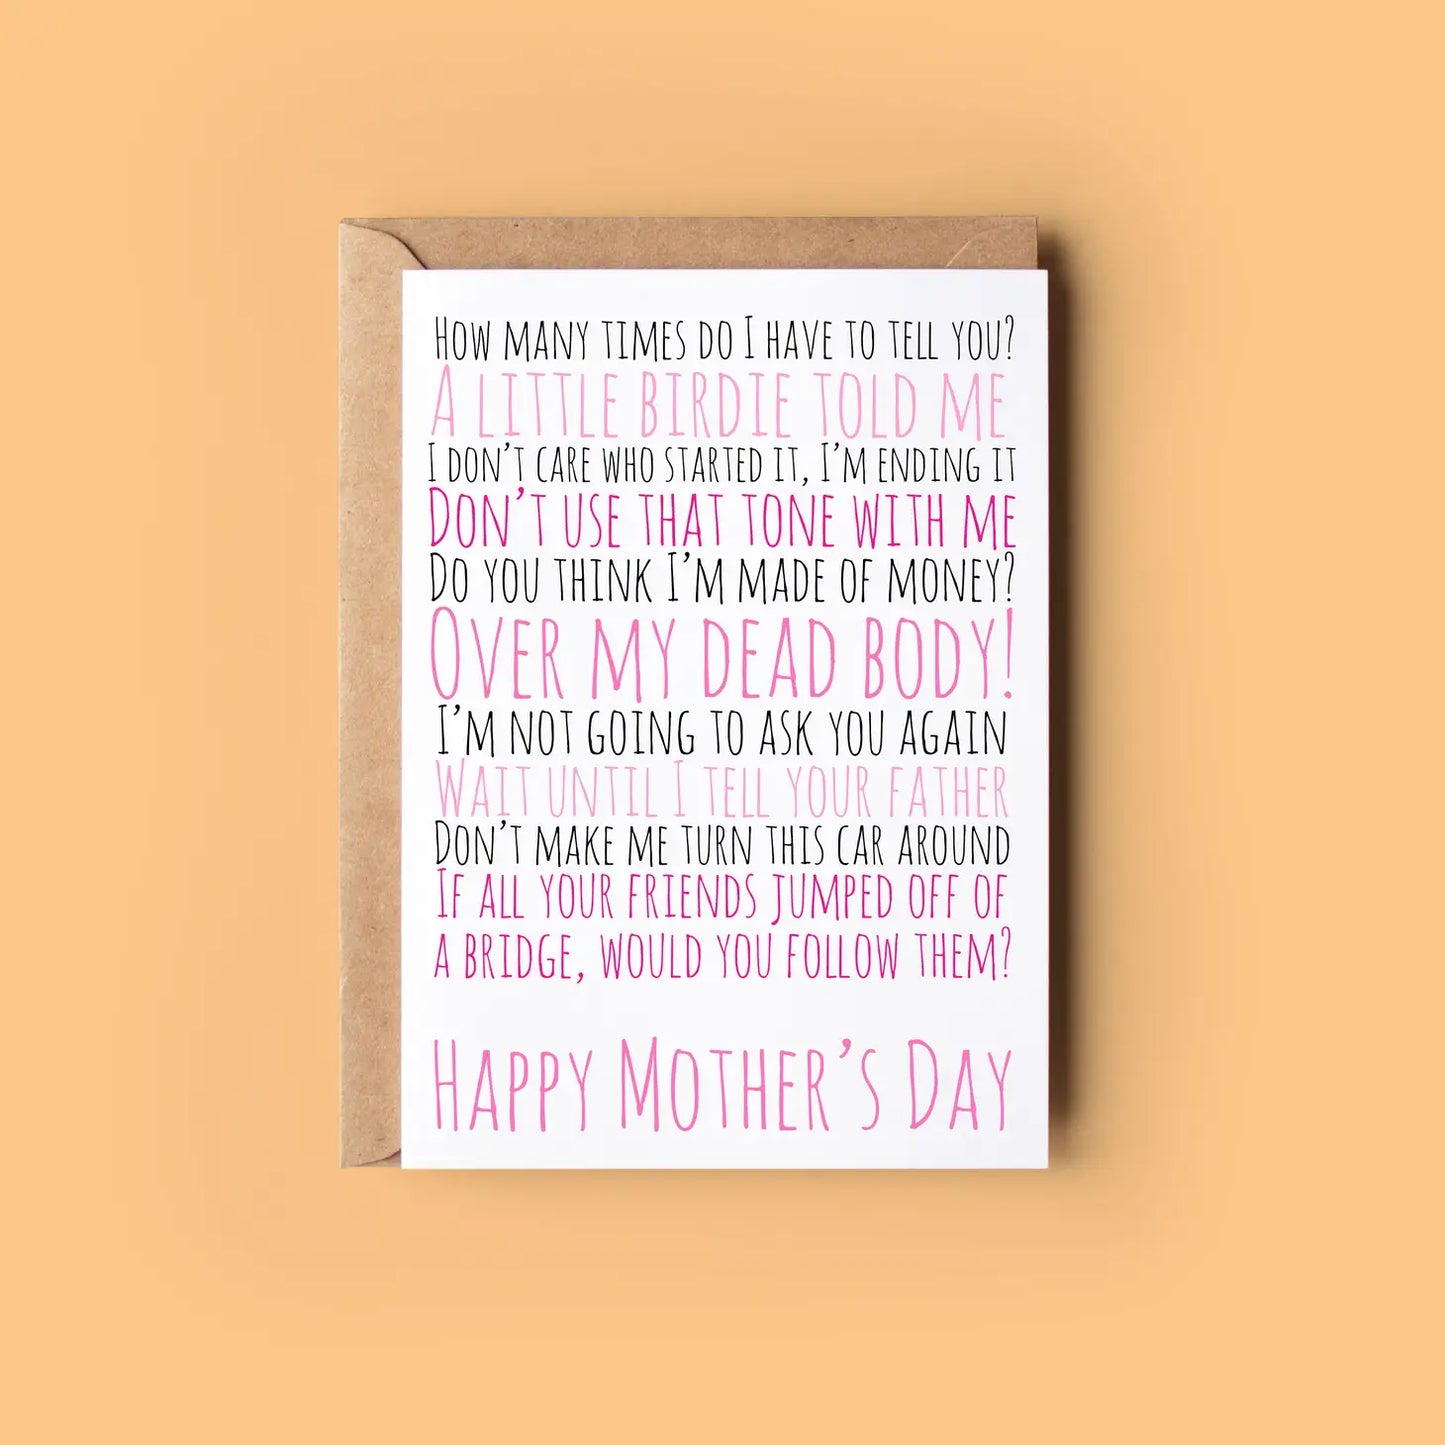 Irish Mammy Sayings - Greeting Cards Made in Ireland